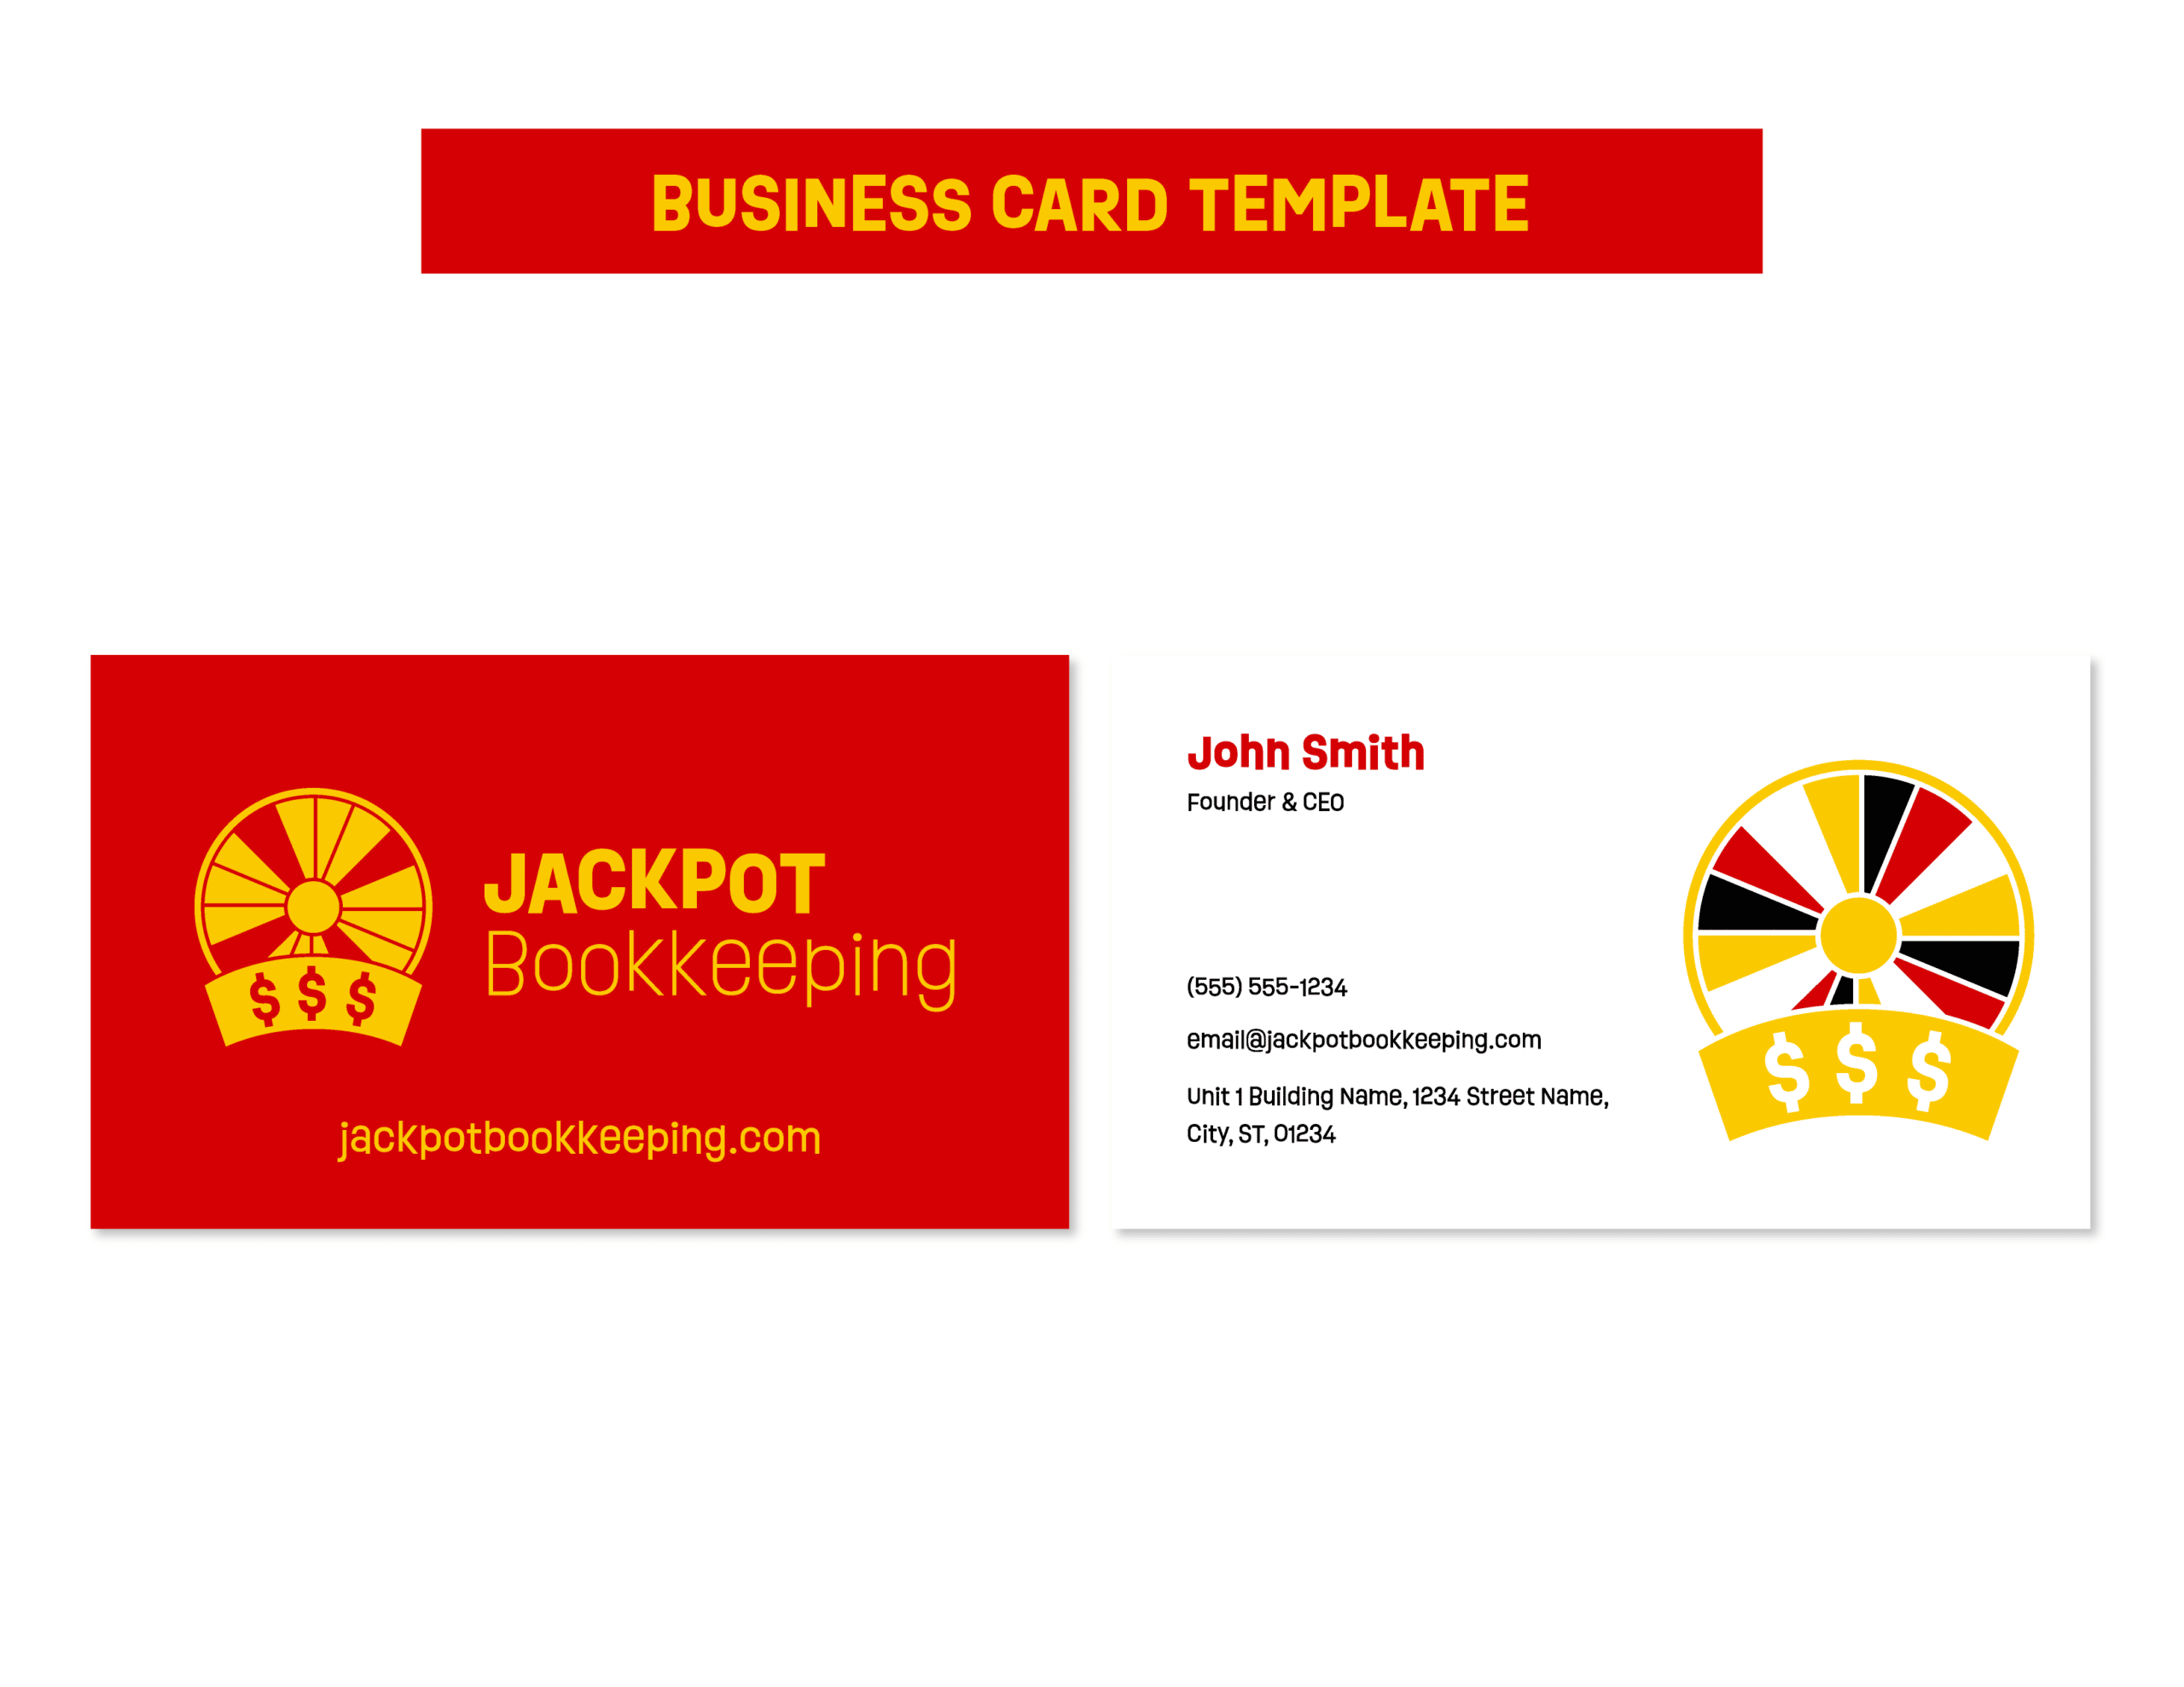 04JackpotBK_Showcase_Business Card Template